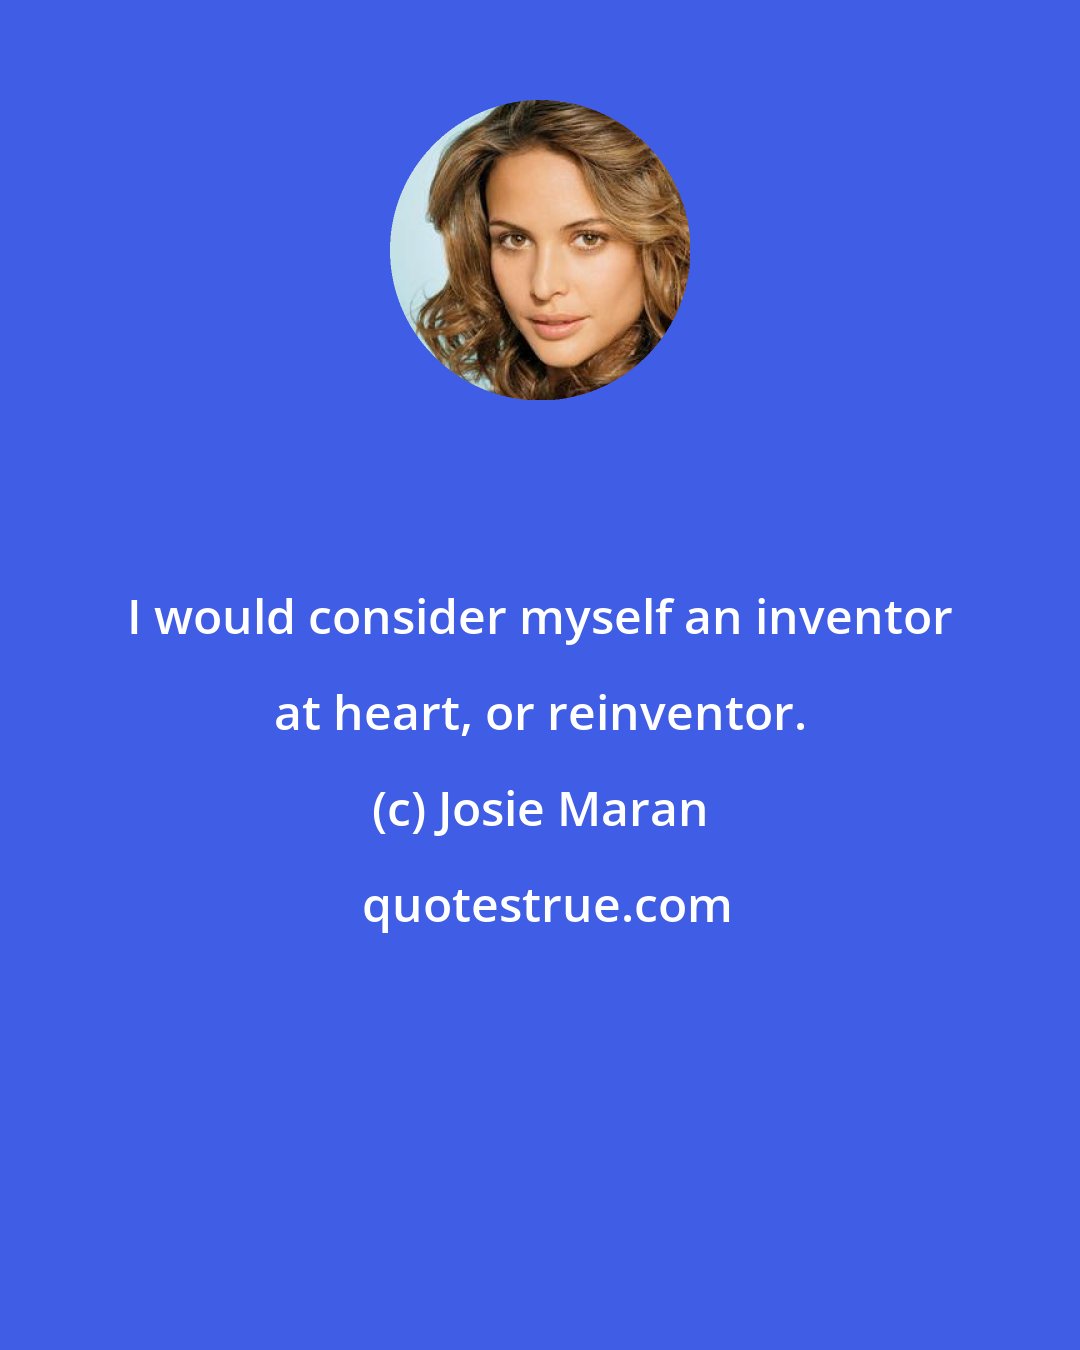 Josie Maran: I would consider myself an inventor at heart, or reinventor.